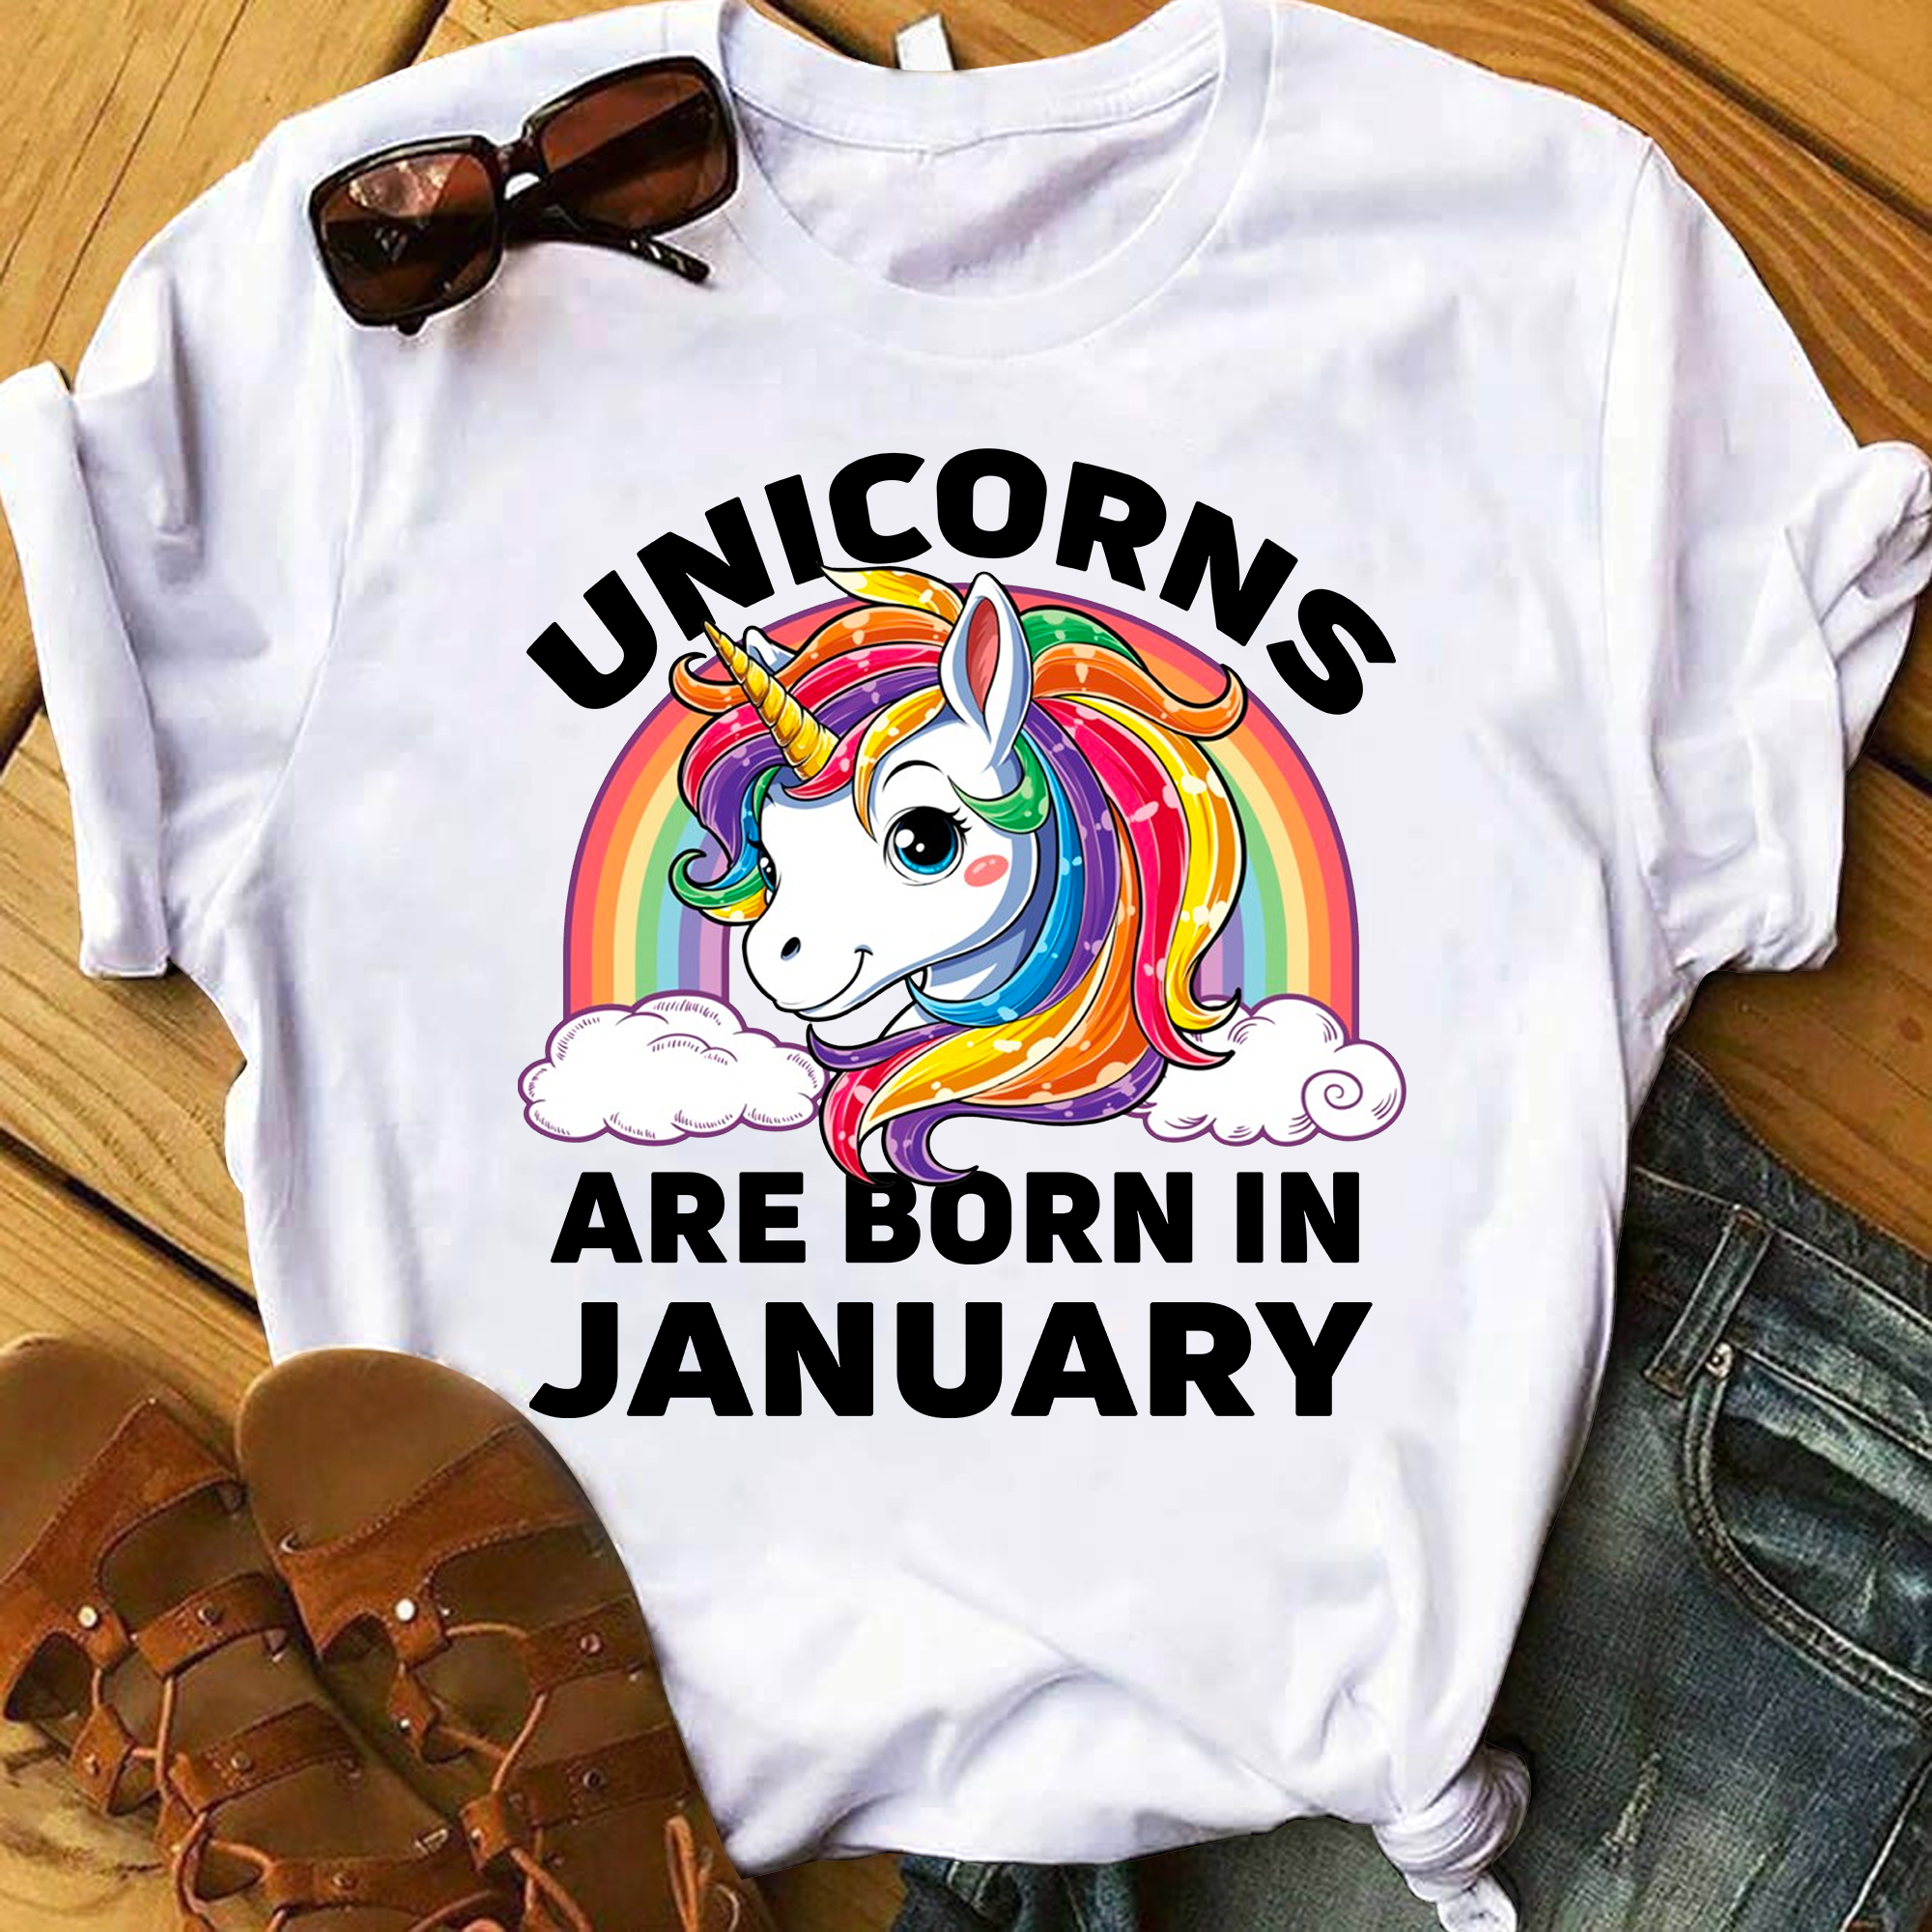 Unicorns Are Born In January Tshirt, Birthday Gift For Unicorn Lovers